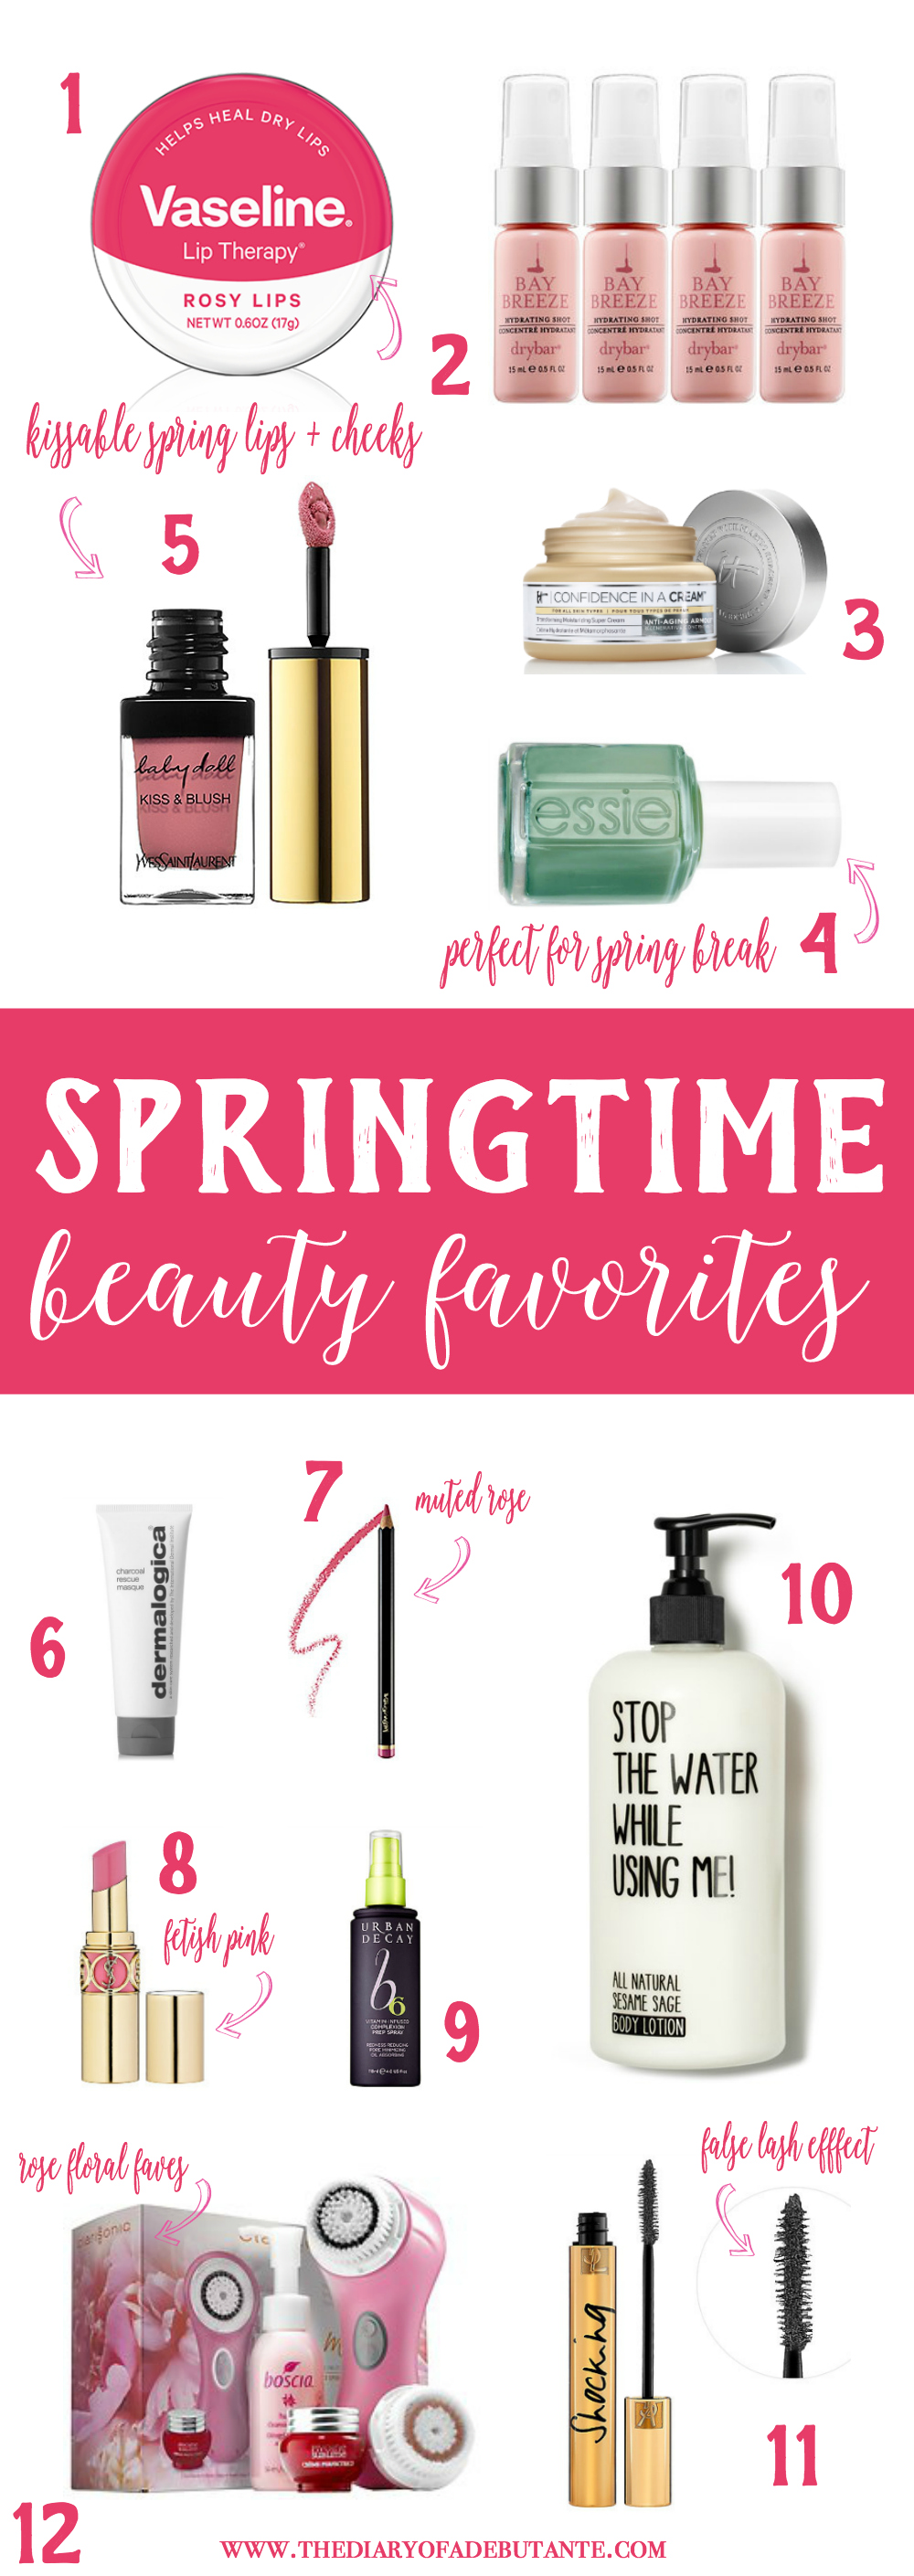 spring beauty favorites, beauty favorites, favorite beauty products, beauty products for spring, Stephanie Ziajka, Diary of a Debutante, Vaseline